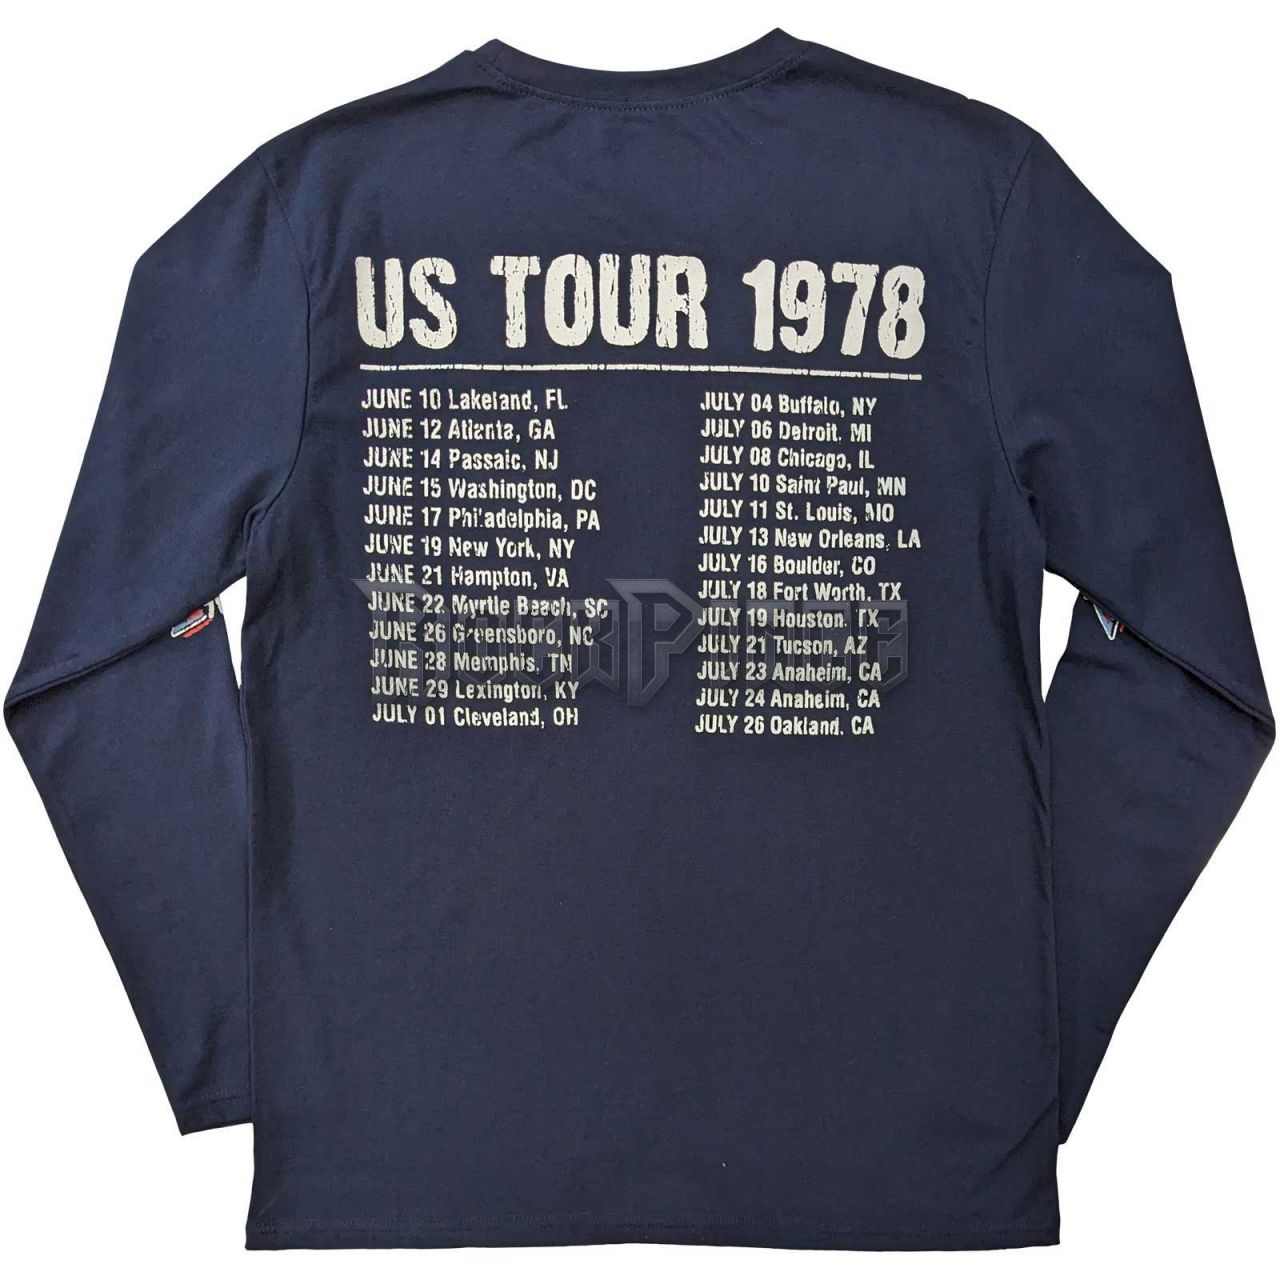 The Rolling Stones - US Tour '78 - unisex hosszú ujjú póló - RSLST116MN